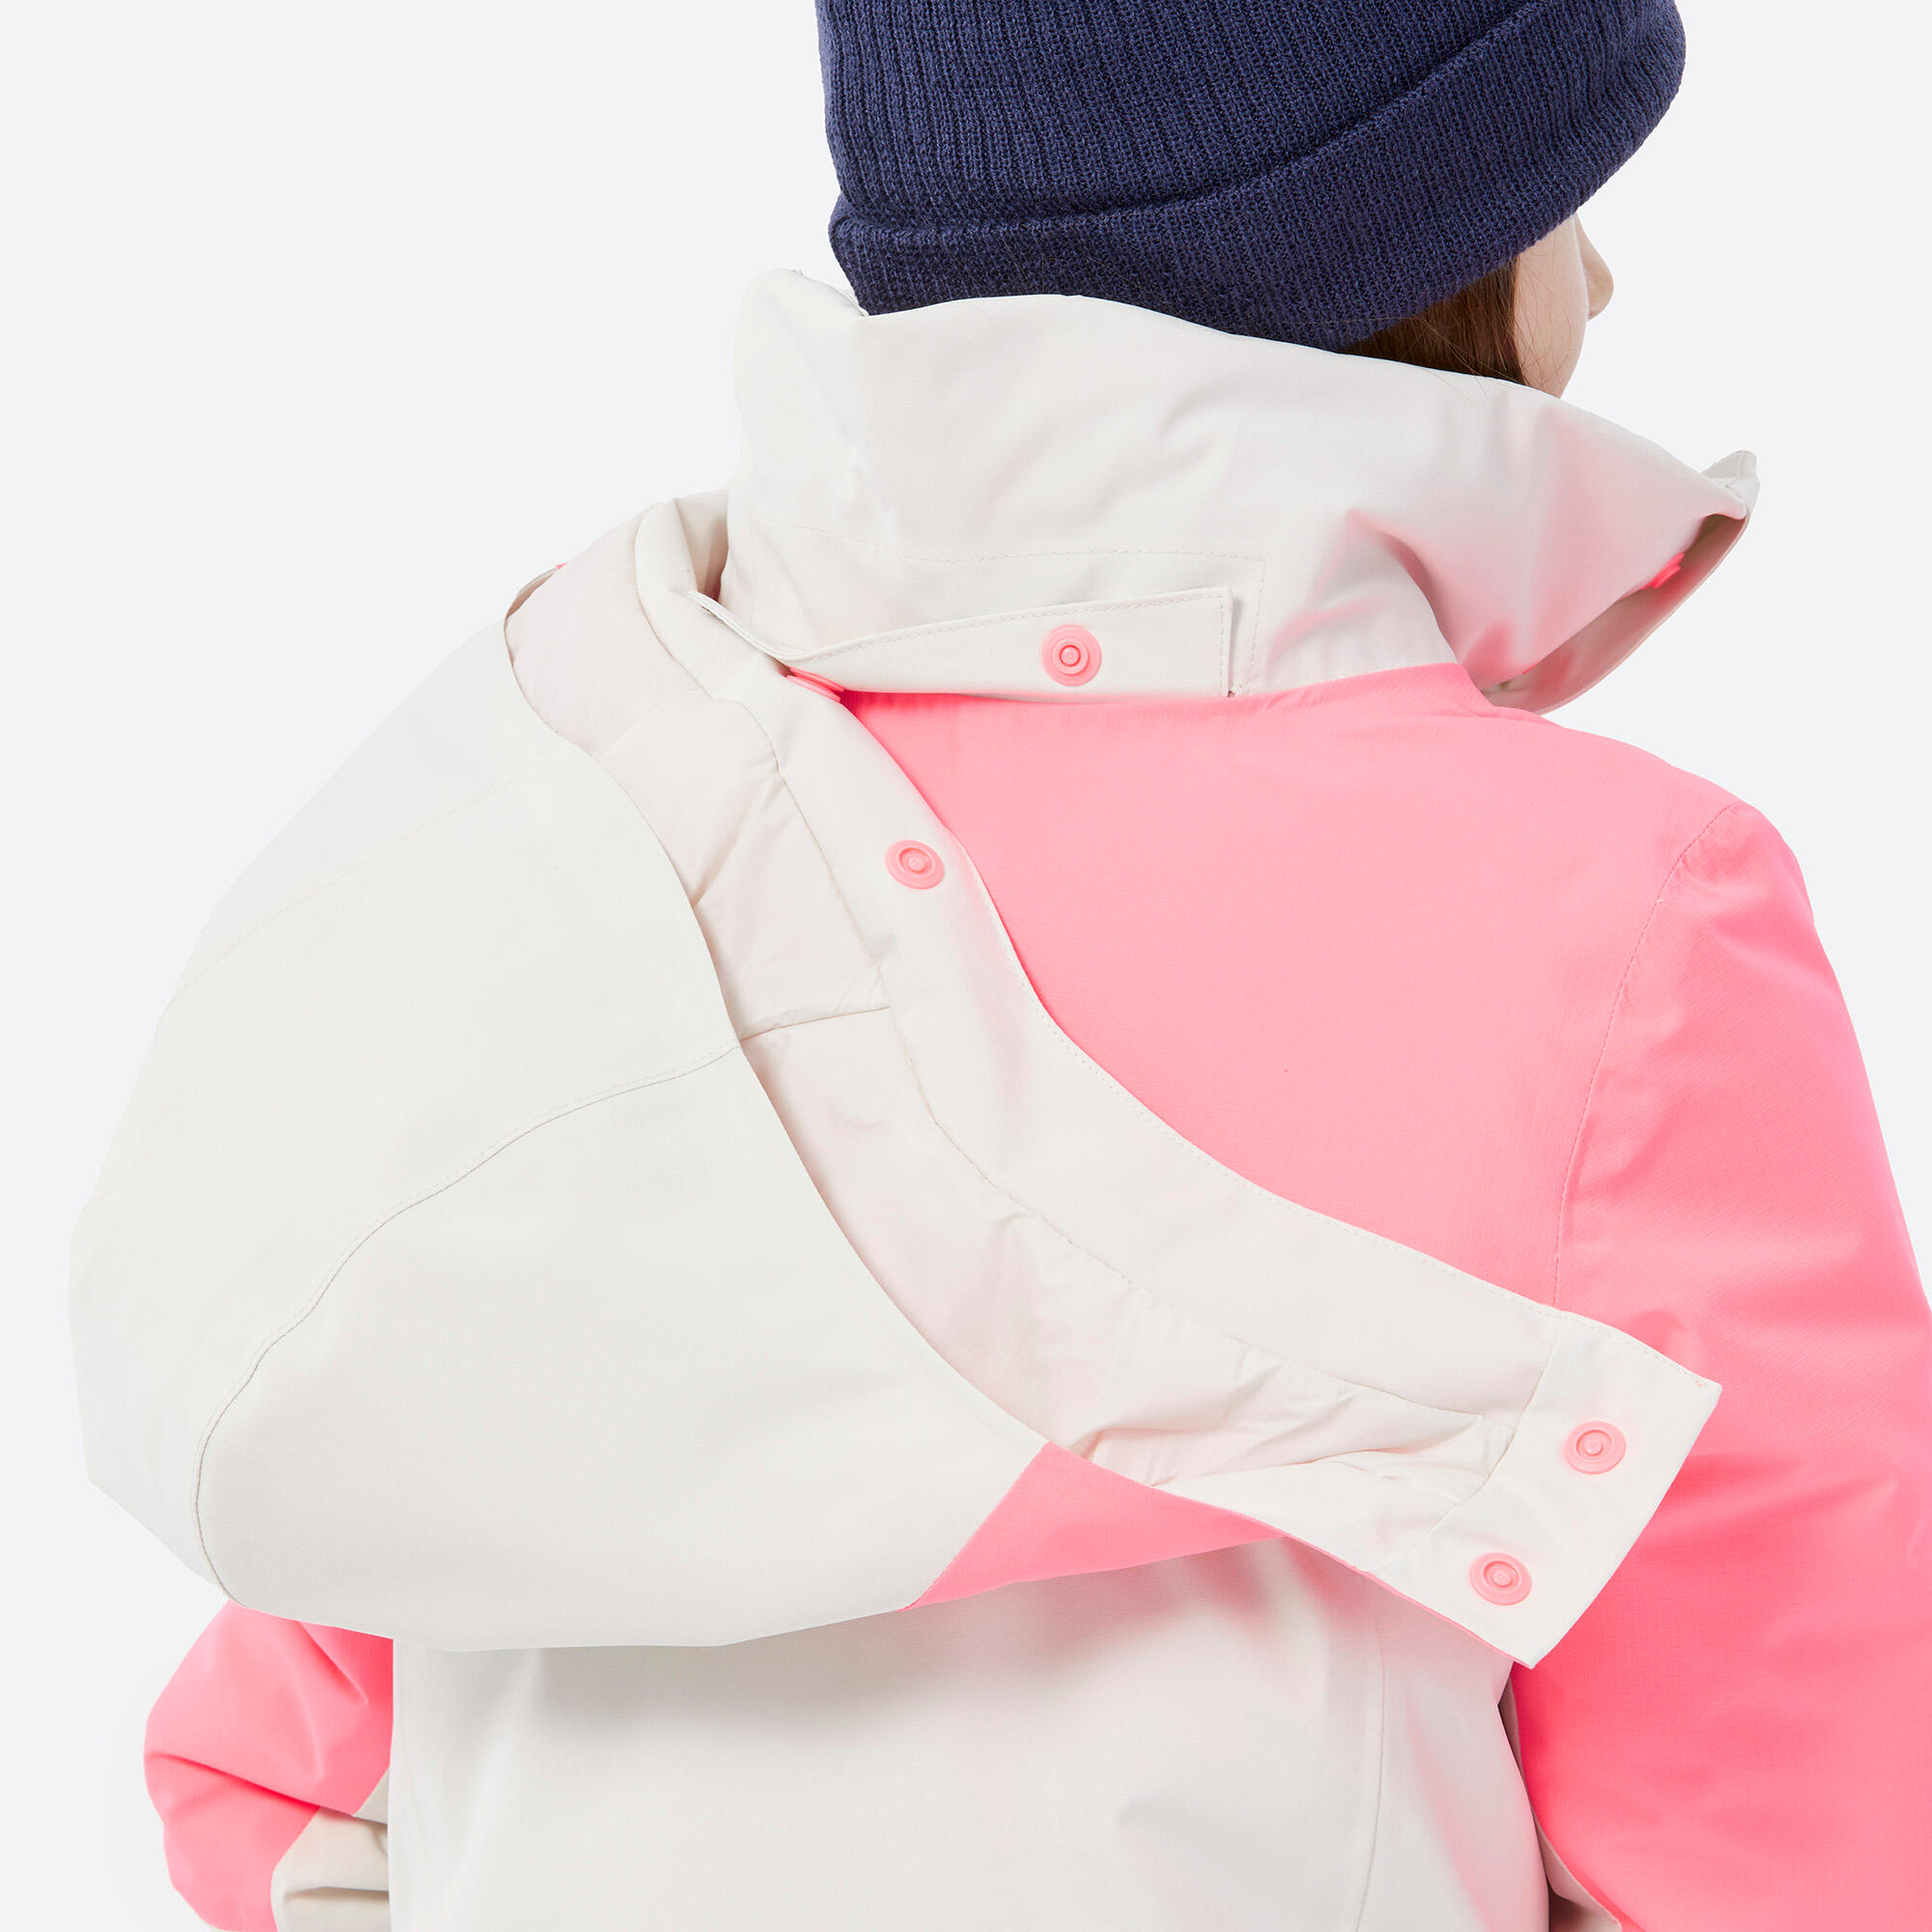 Kids’ warm and waterproof ski jacket 900 - White and pink 8/12